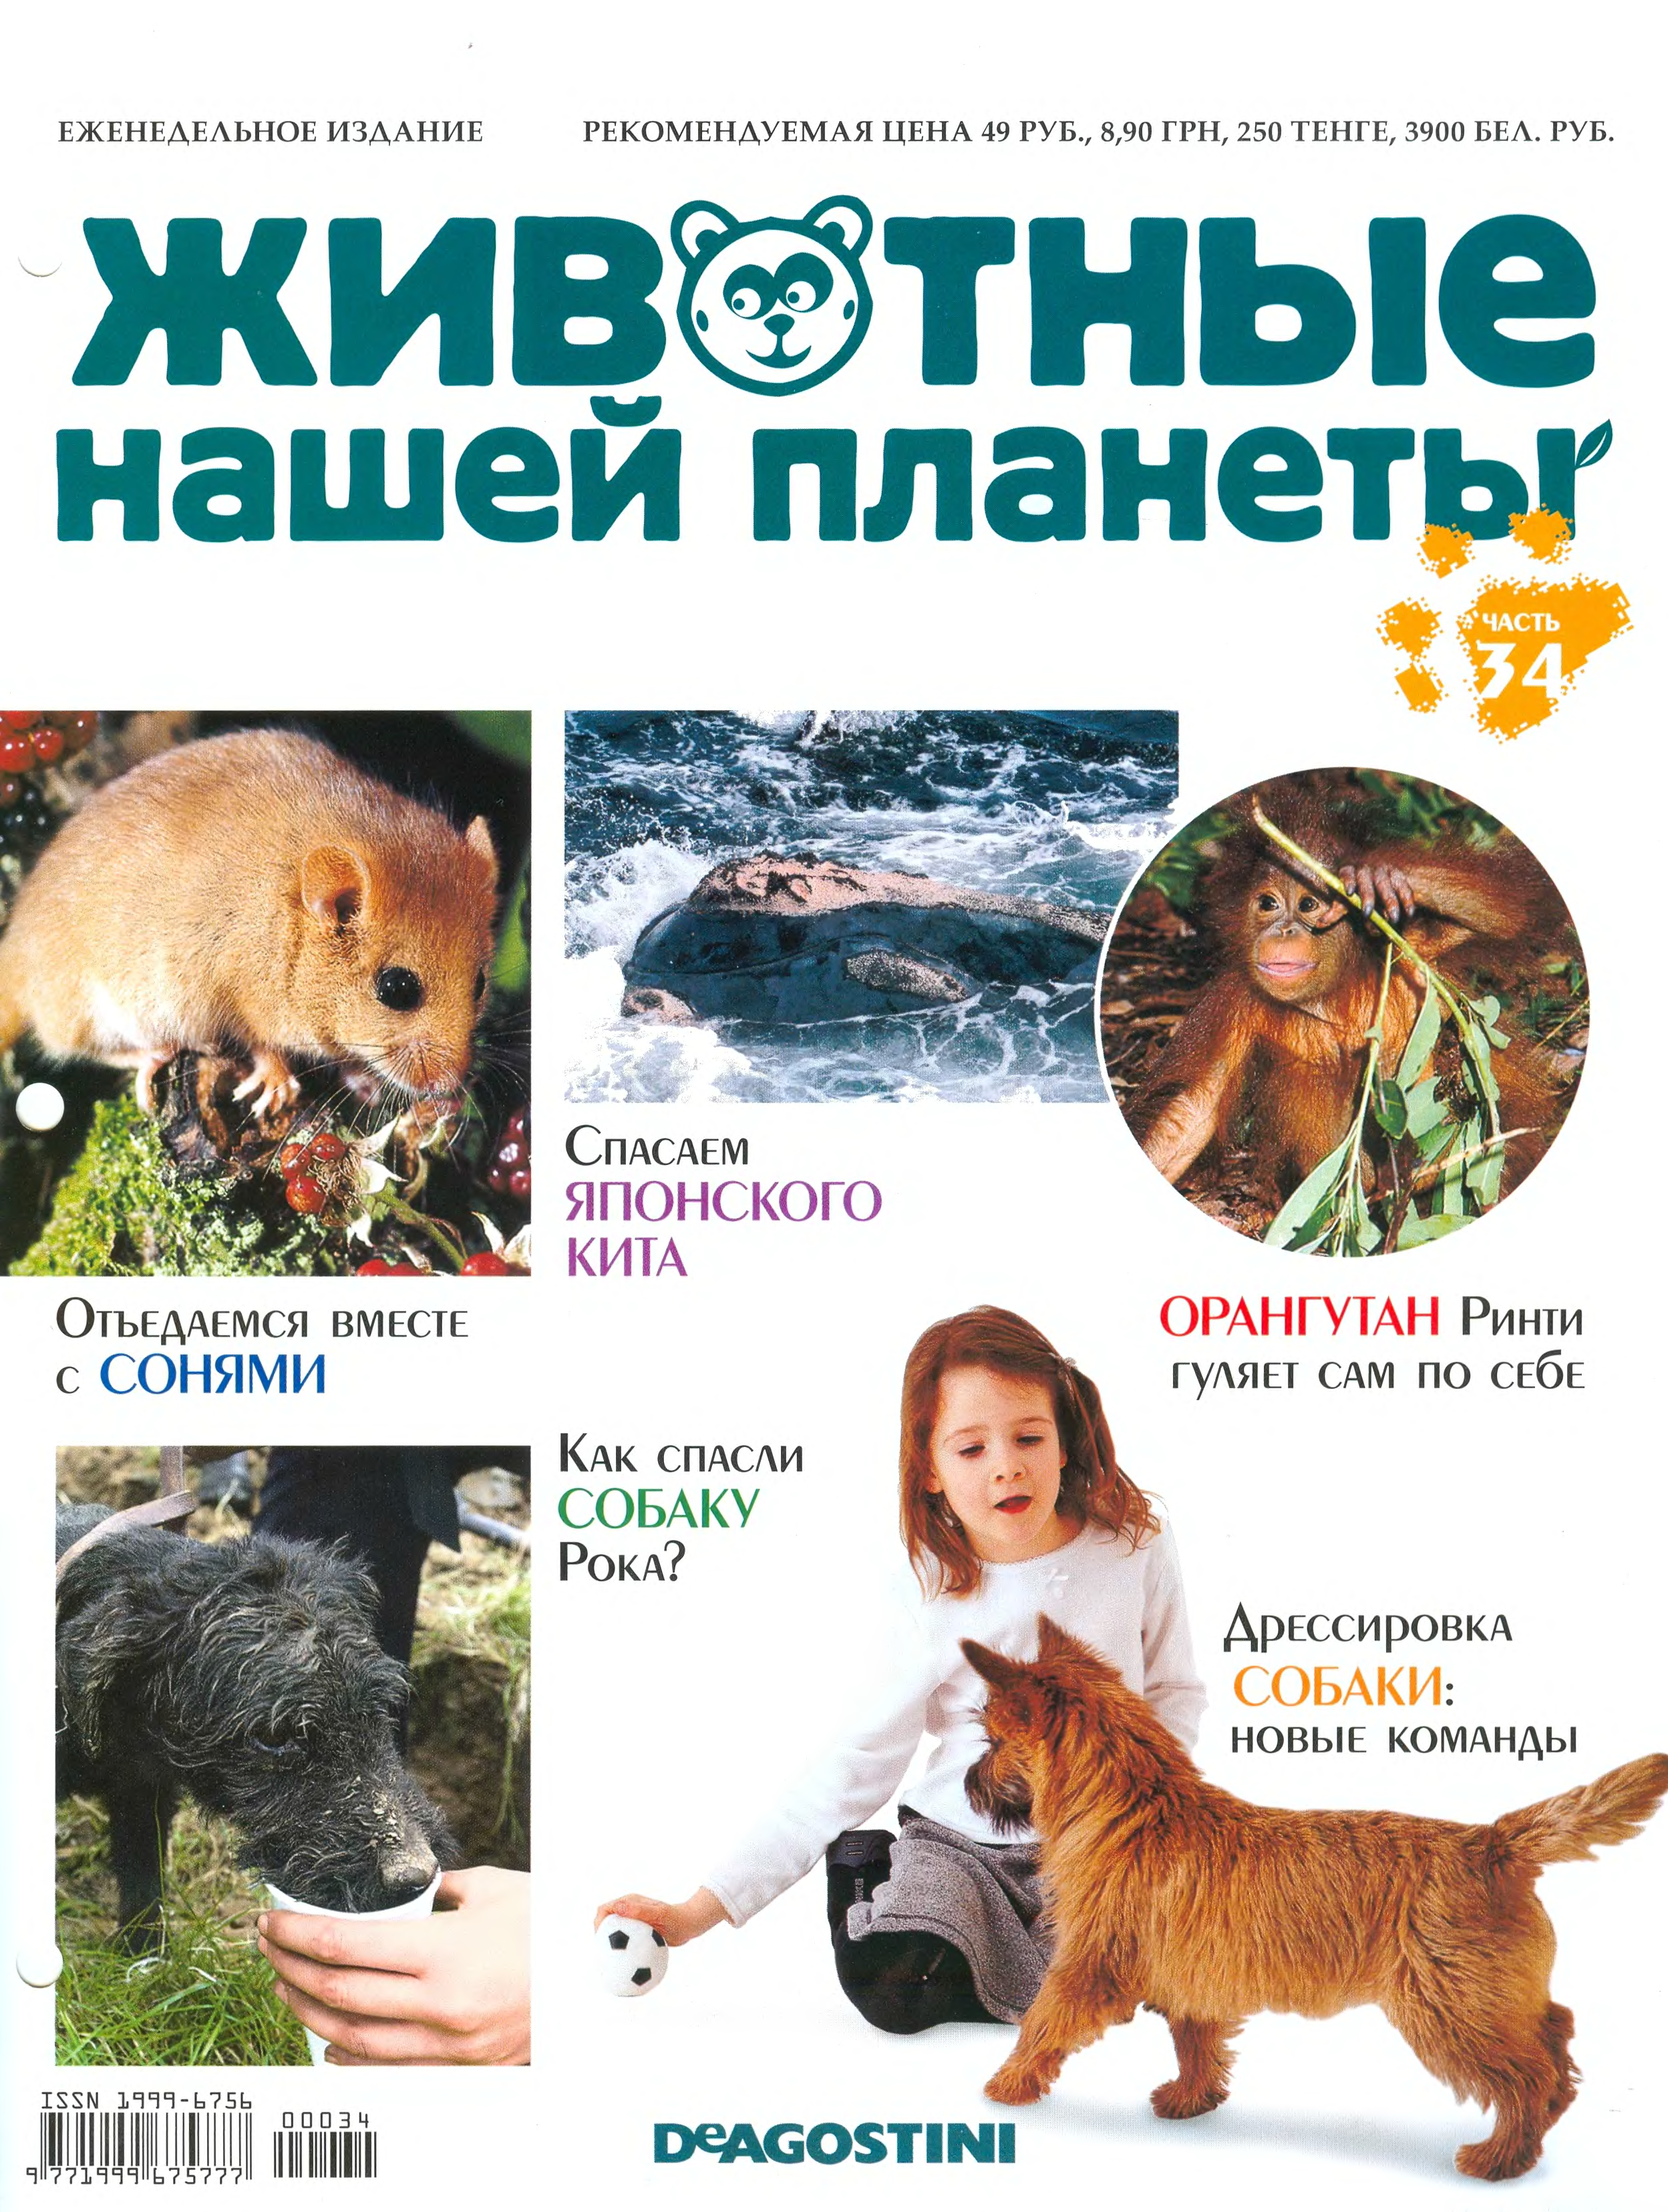 Журнал про животных